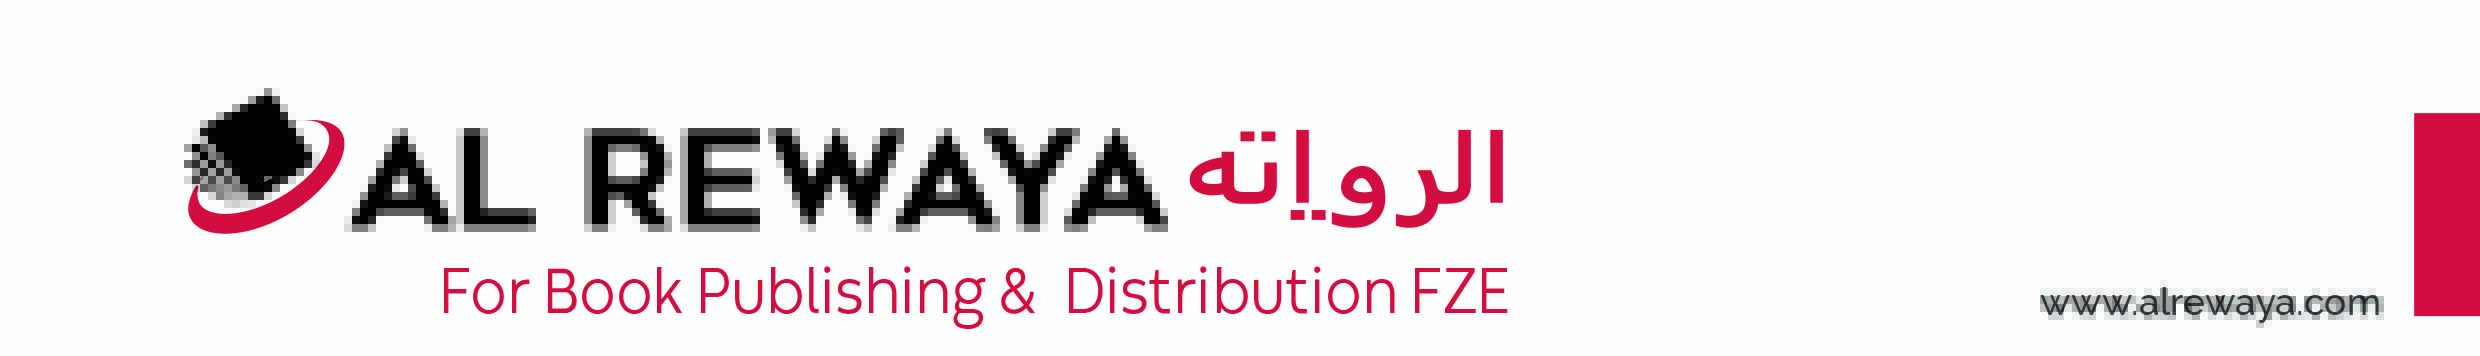 Al Rewaya for Book Publishing and Distribution FZE